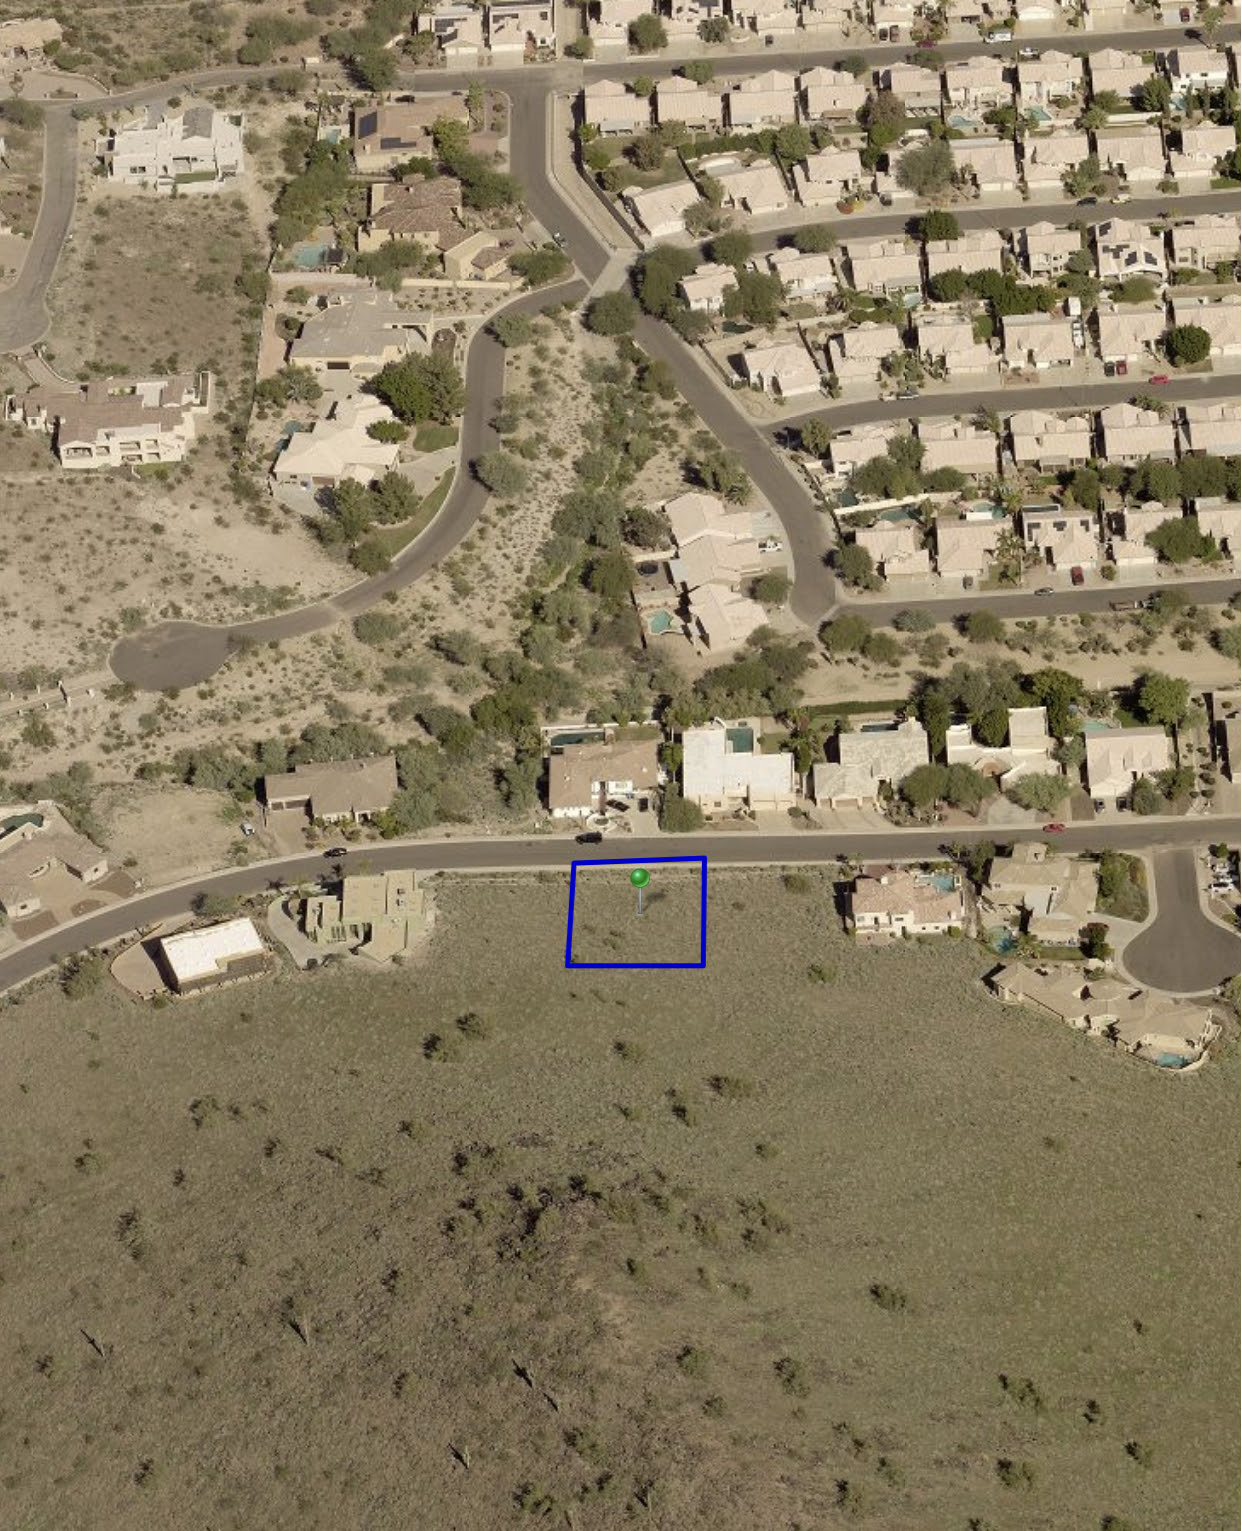 6131 W Alameda Rd Glendale, AZ 85310 wholesale property vacant lot for sale